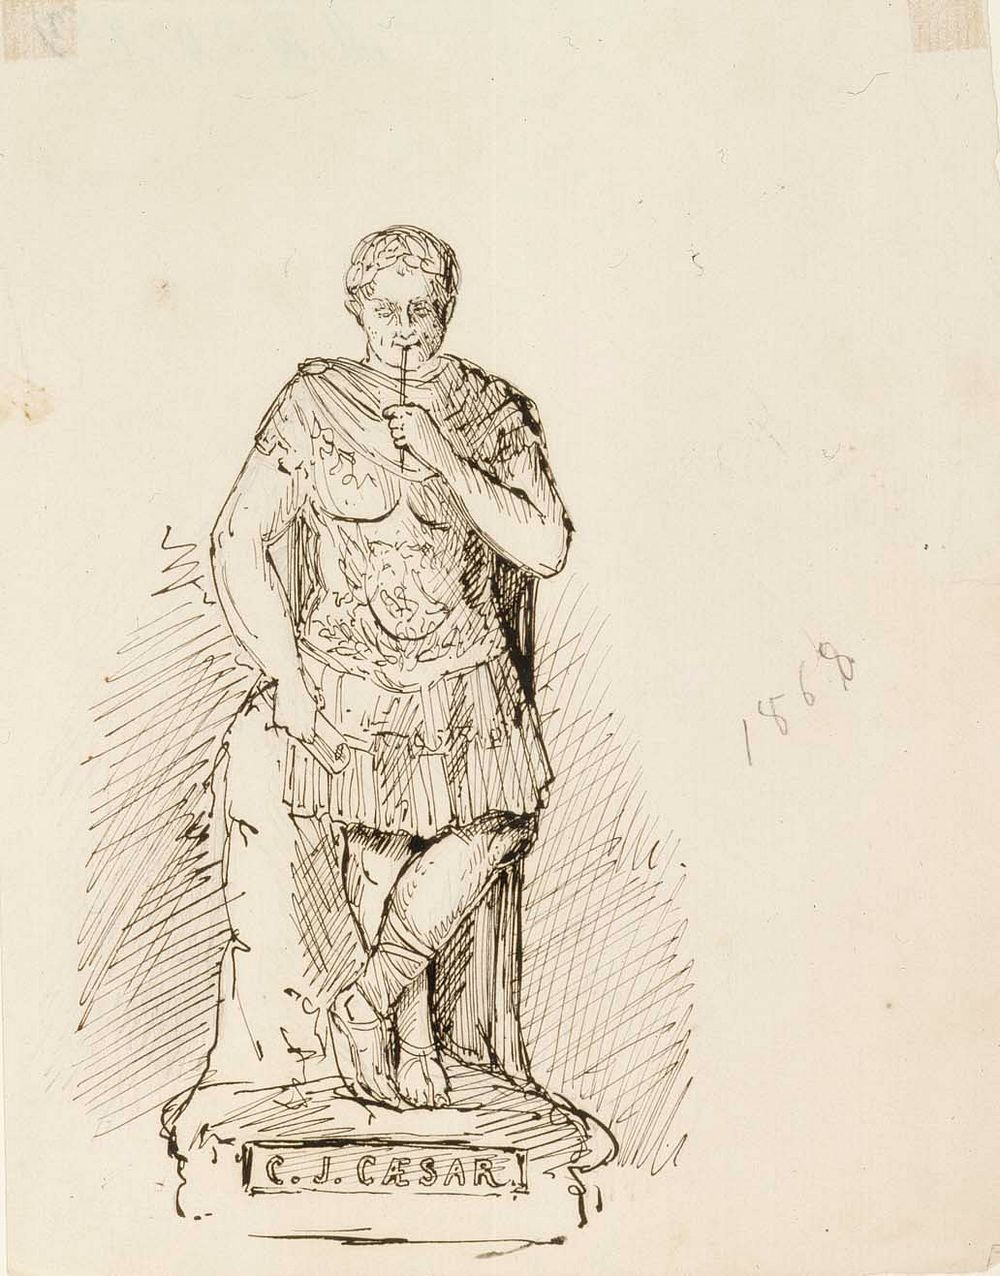 Caesarin patsas, 1868 by Albert Edelfelt